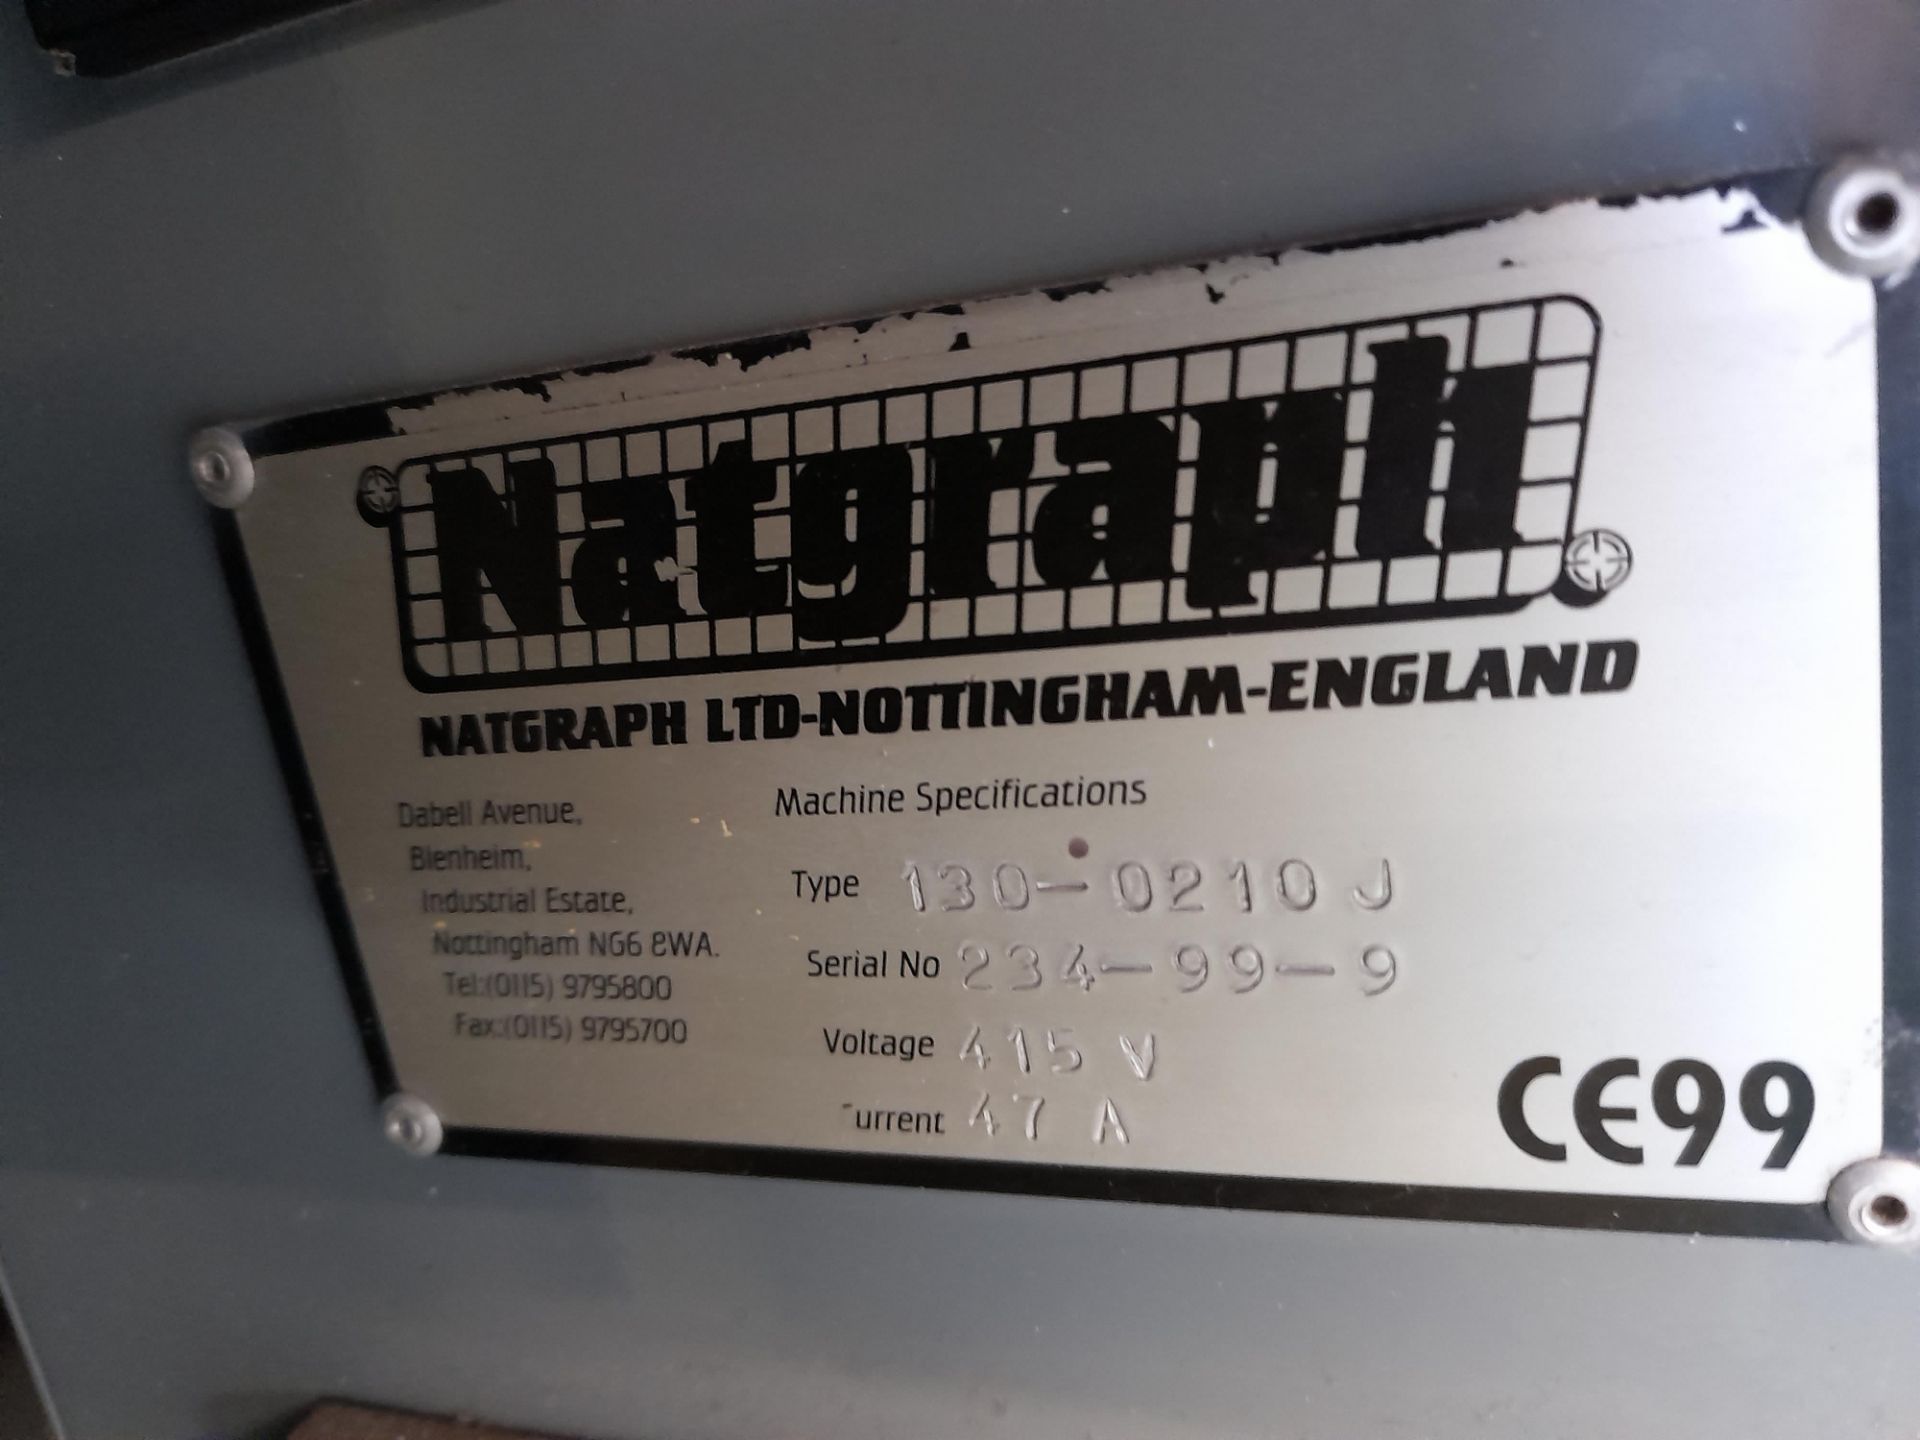 Natgraph type 130-0210J UV Dryer, serial number 234-99-9, lamp hours 7889, belt width 1100mm - Image 7 of 8